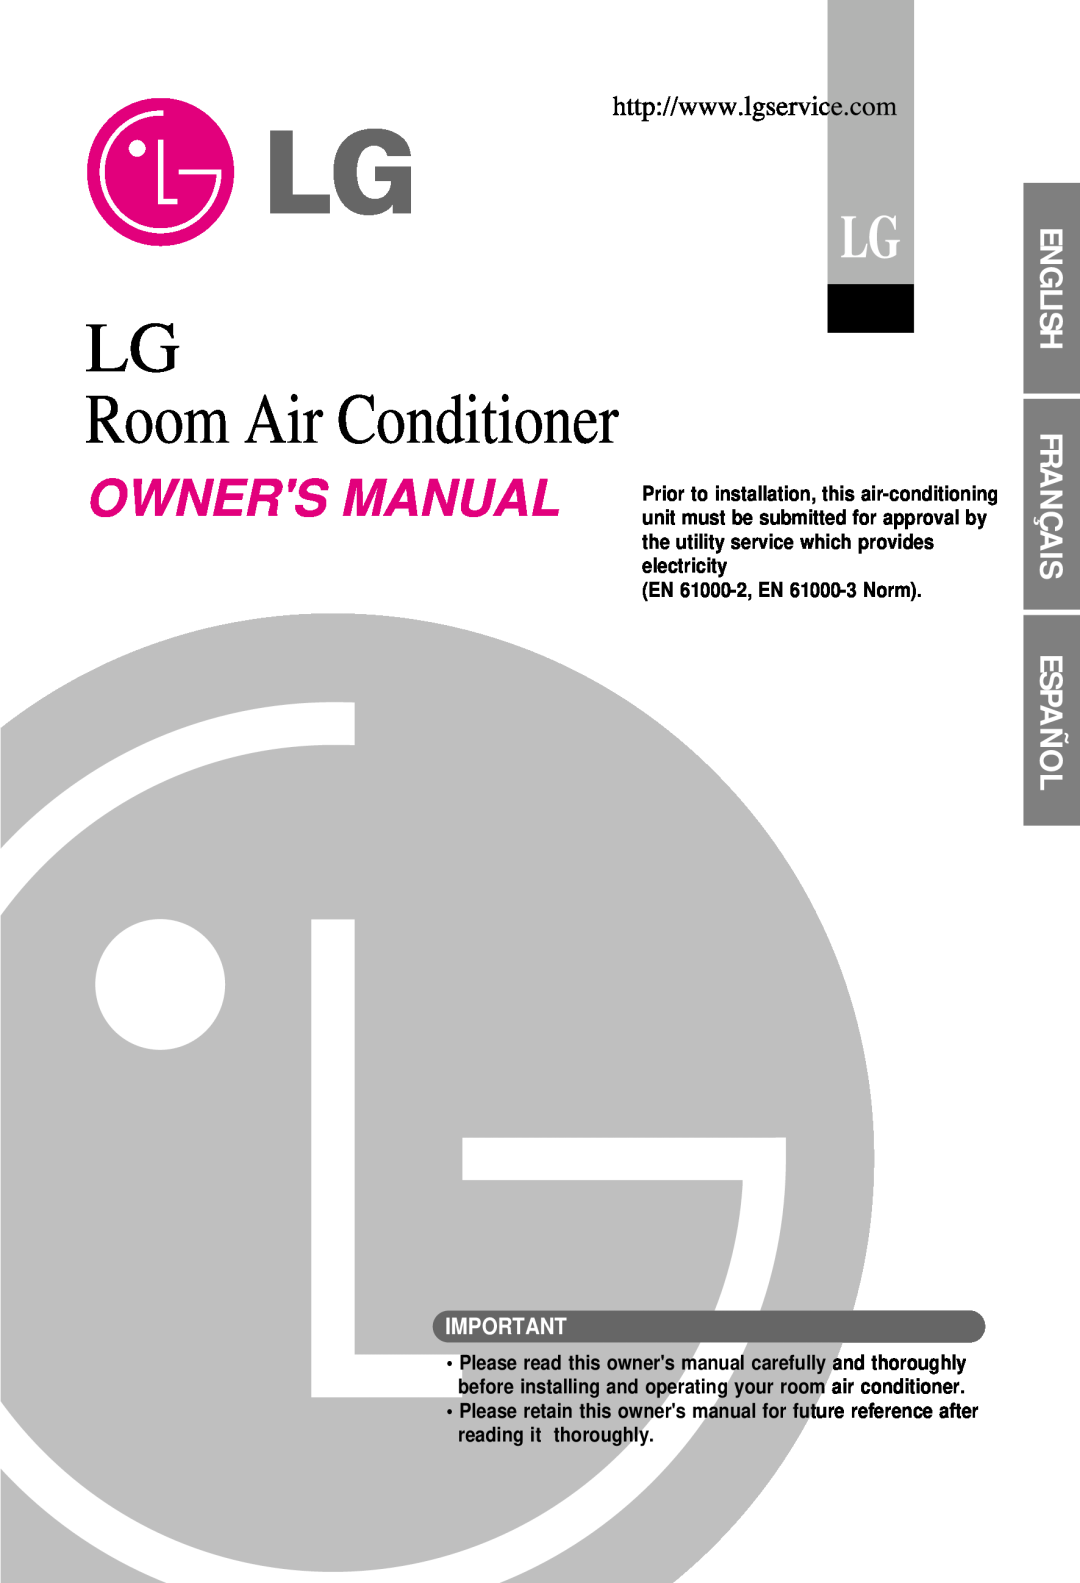 Goldstar LS242CE owner manual English Français Español, LG Room Air Conditioner 